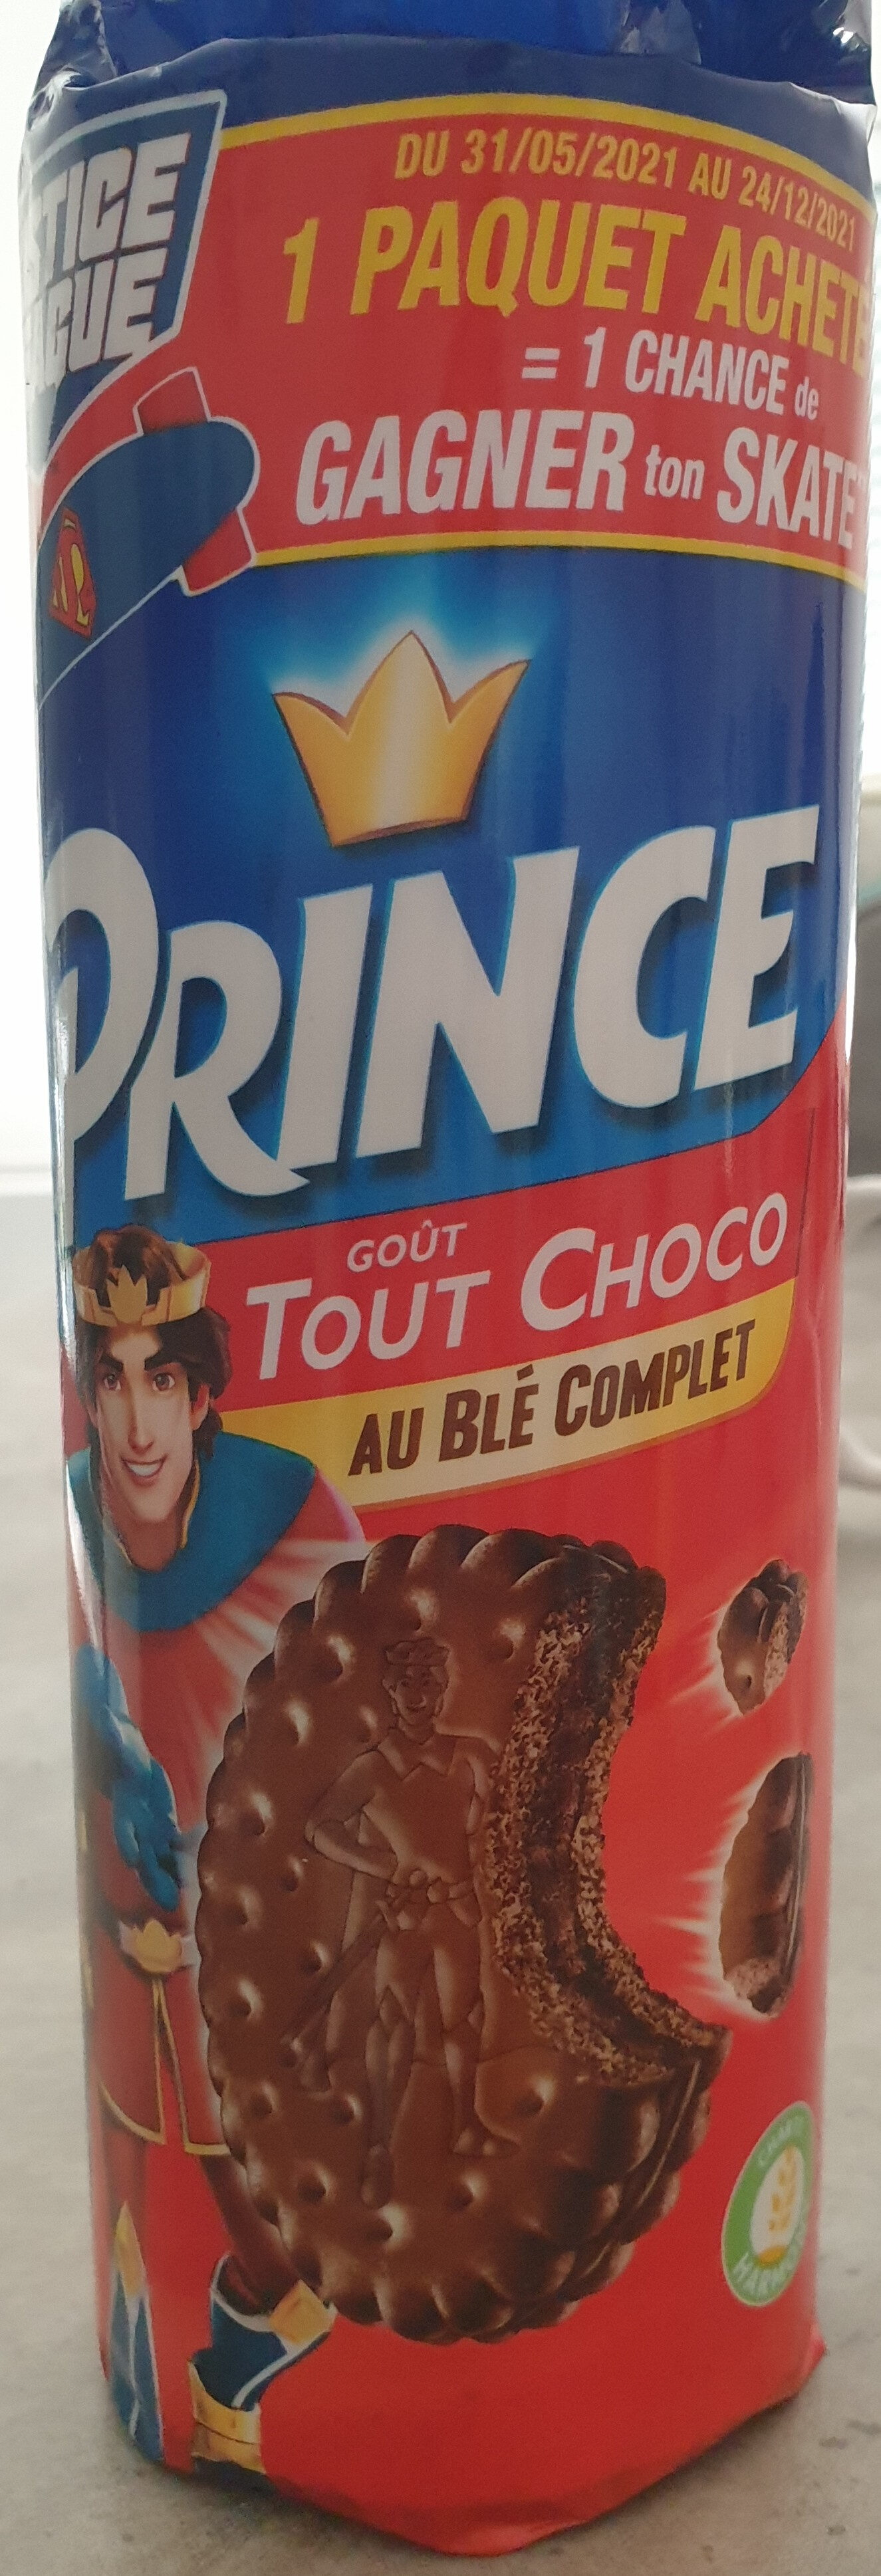 Prince goût tout choco - Producto - fr